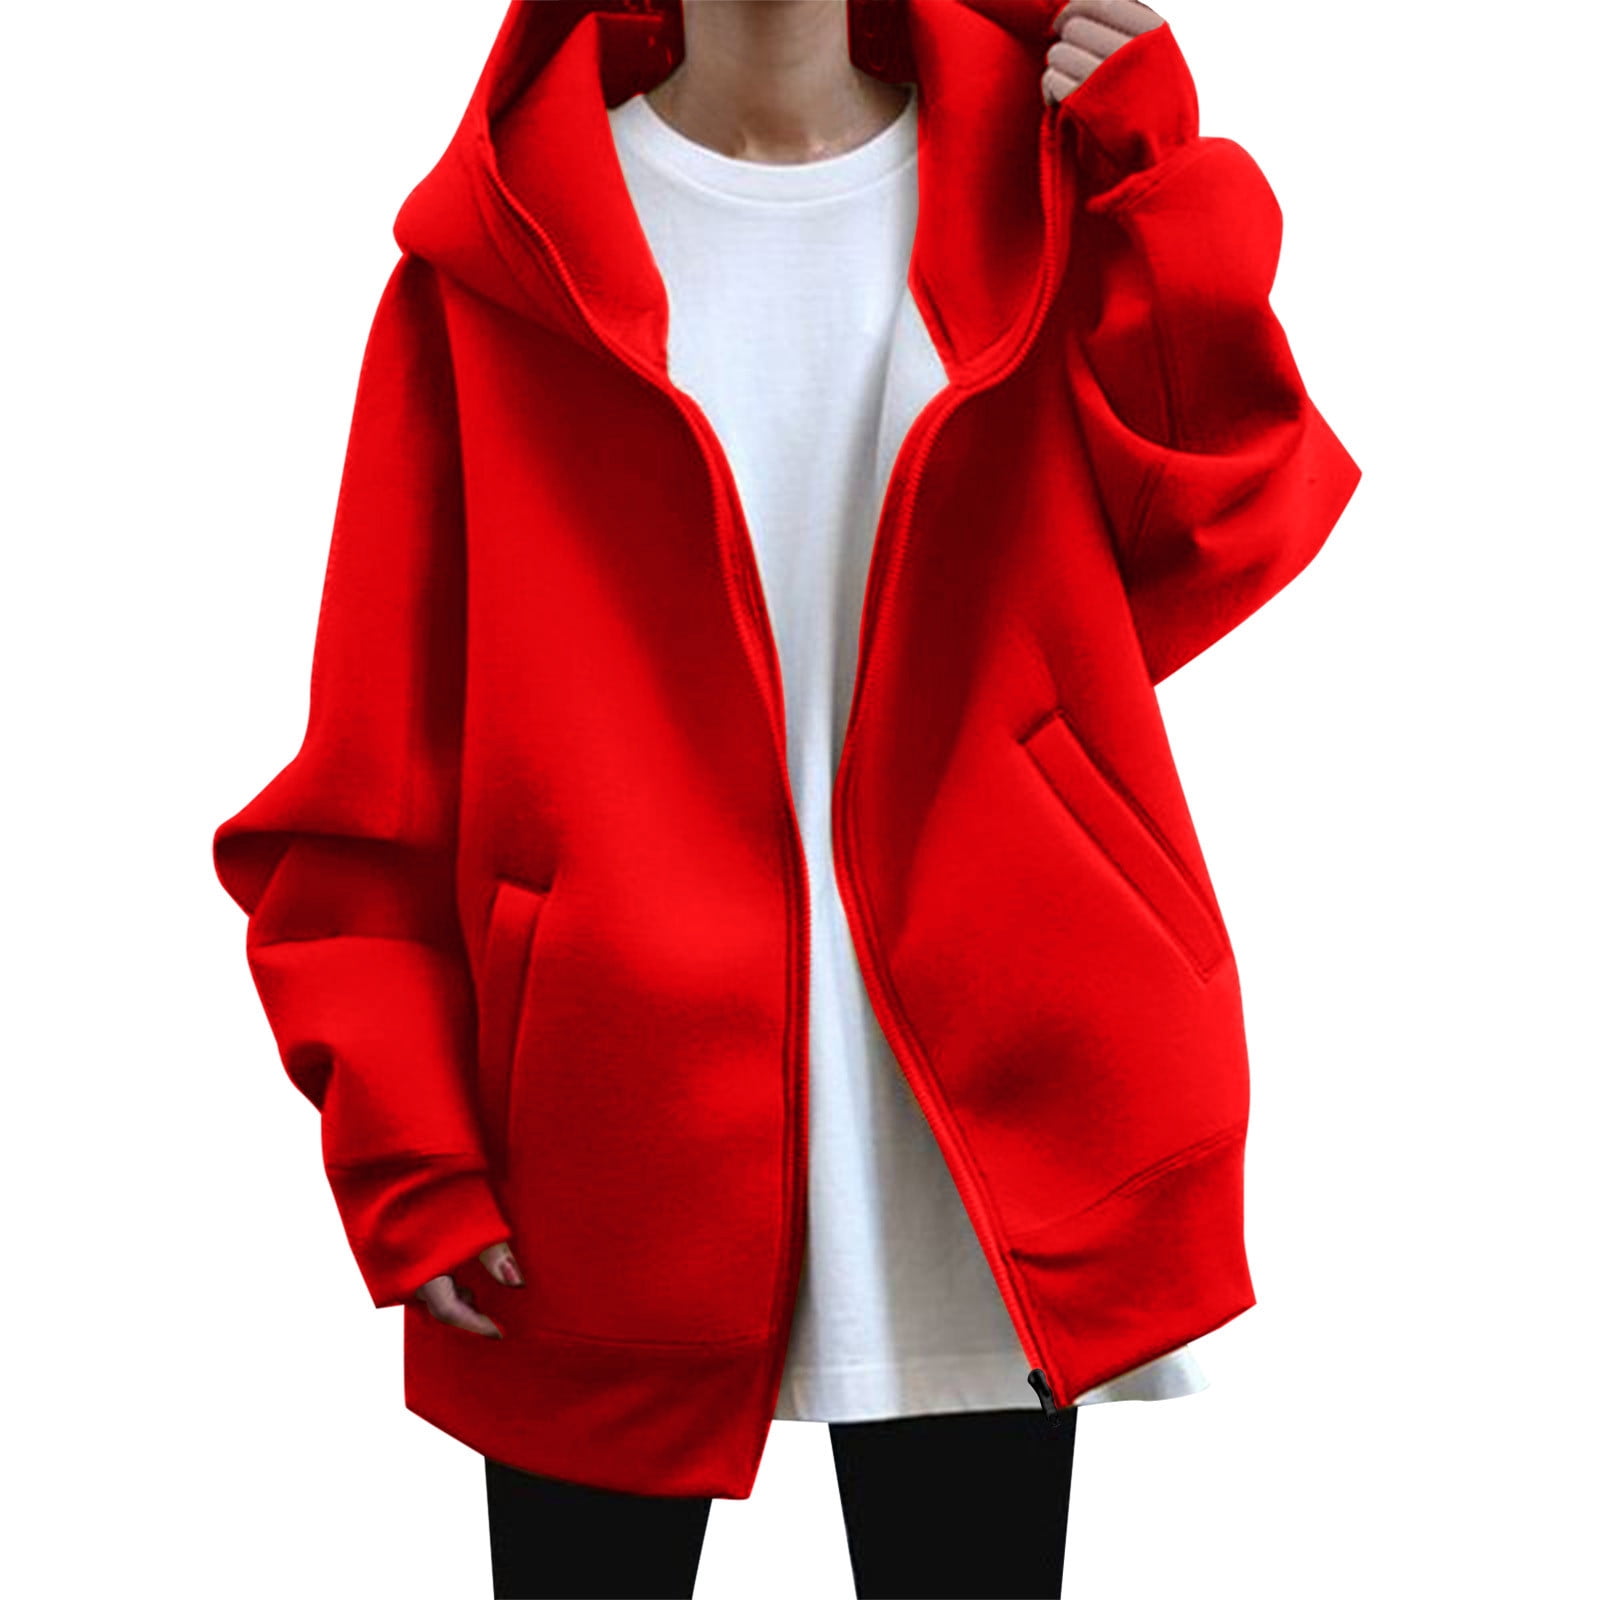 Terry Long Sweatshirt Women Gubotare (Red,S) Hooded Sleeve Womens French Sweatshirt Full-Zip